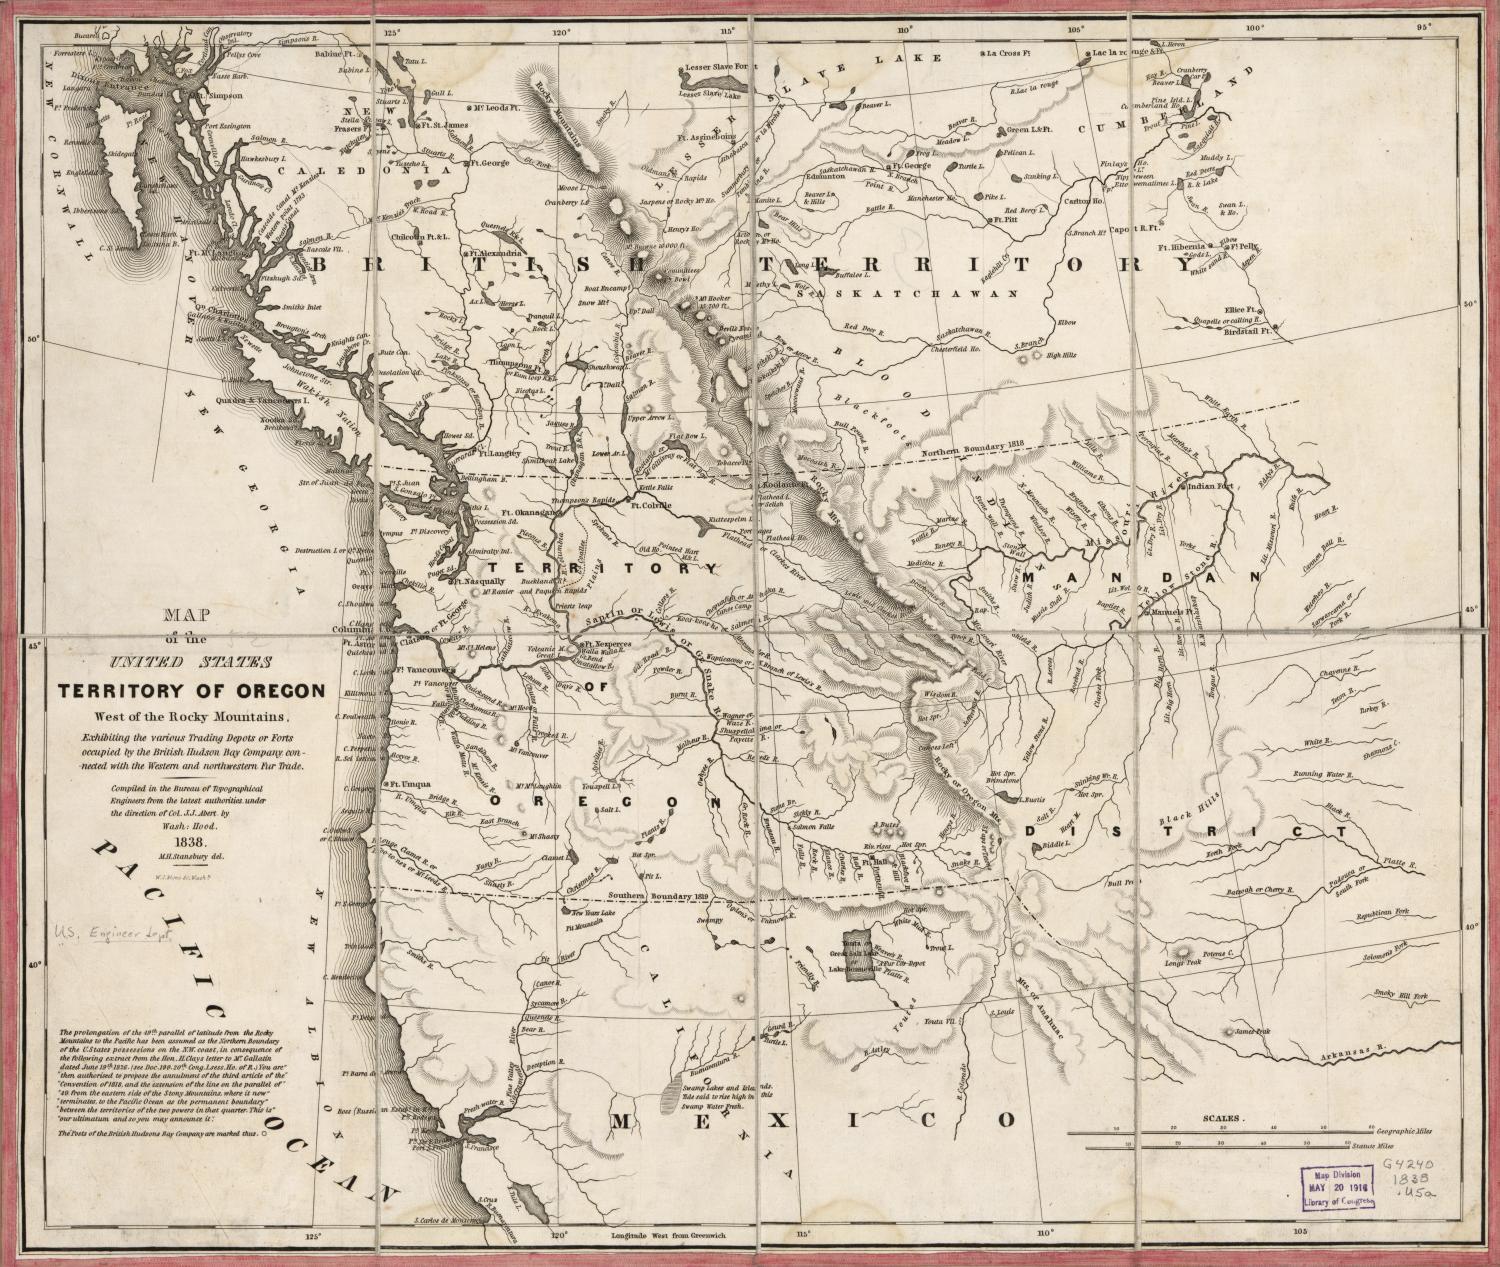 Map of Oregon Territory in 1838